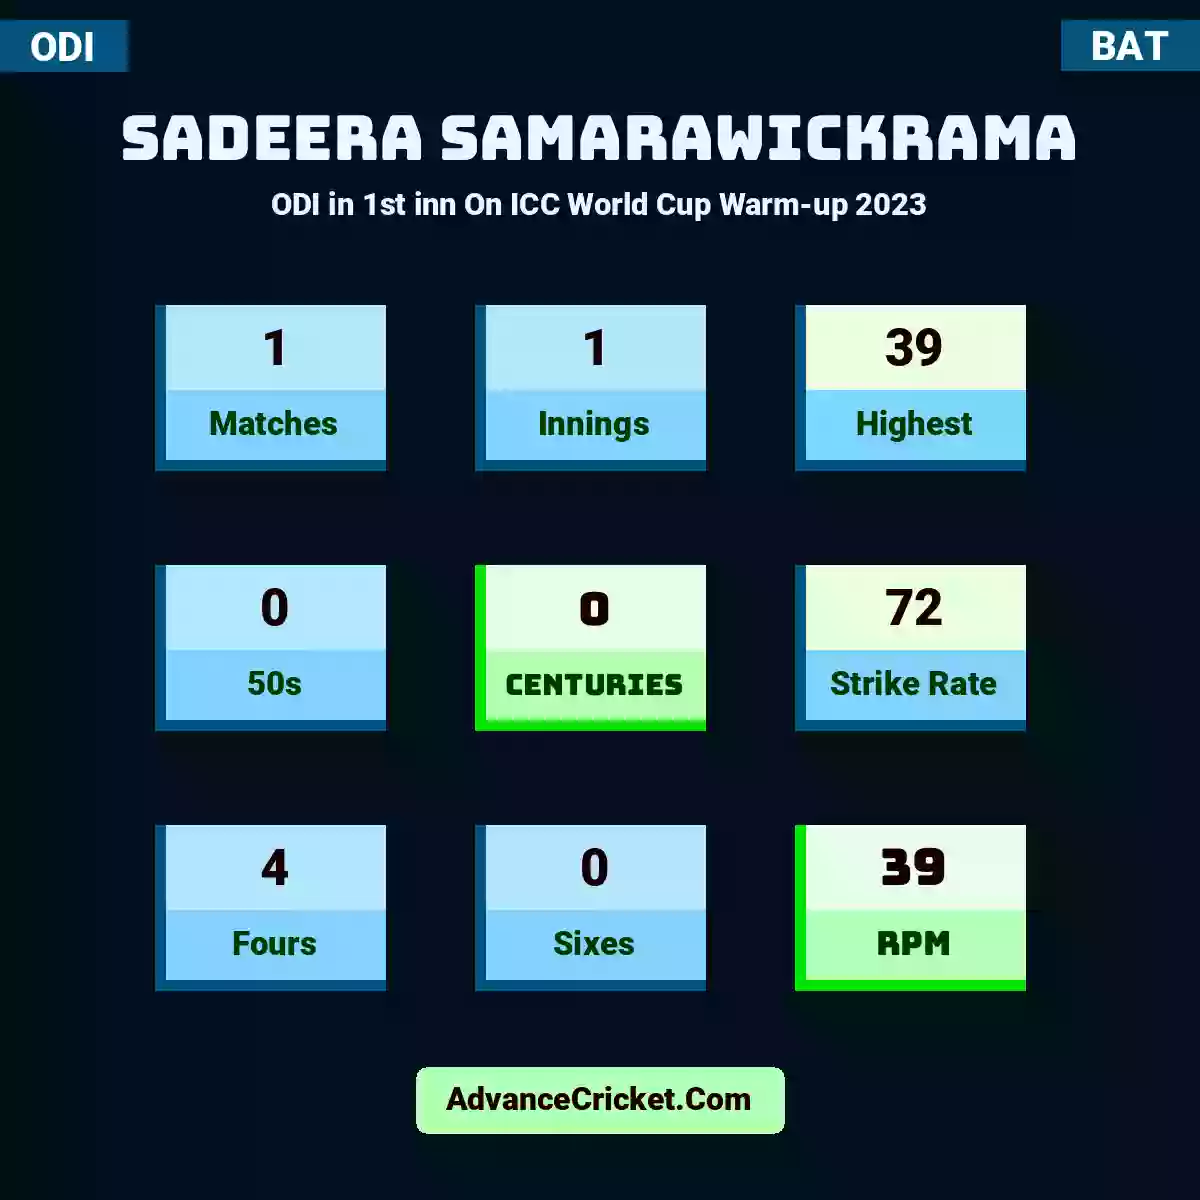 Sadeera Samarawickrama ODI  in 1st inn On ICC World Cup Warm-up 2023, Sadeera Samarawickrama played 1 matches, scored 39 runs as highest, 0 half-centuries, and 0 centuries, with a strike rate of 72. S.Samarawickrama hit 4 fours and 0 sixes, with an RPM of 39.